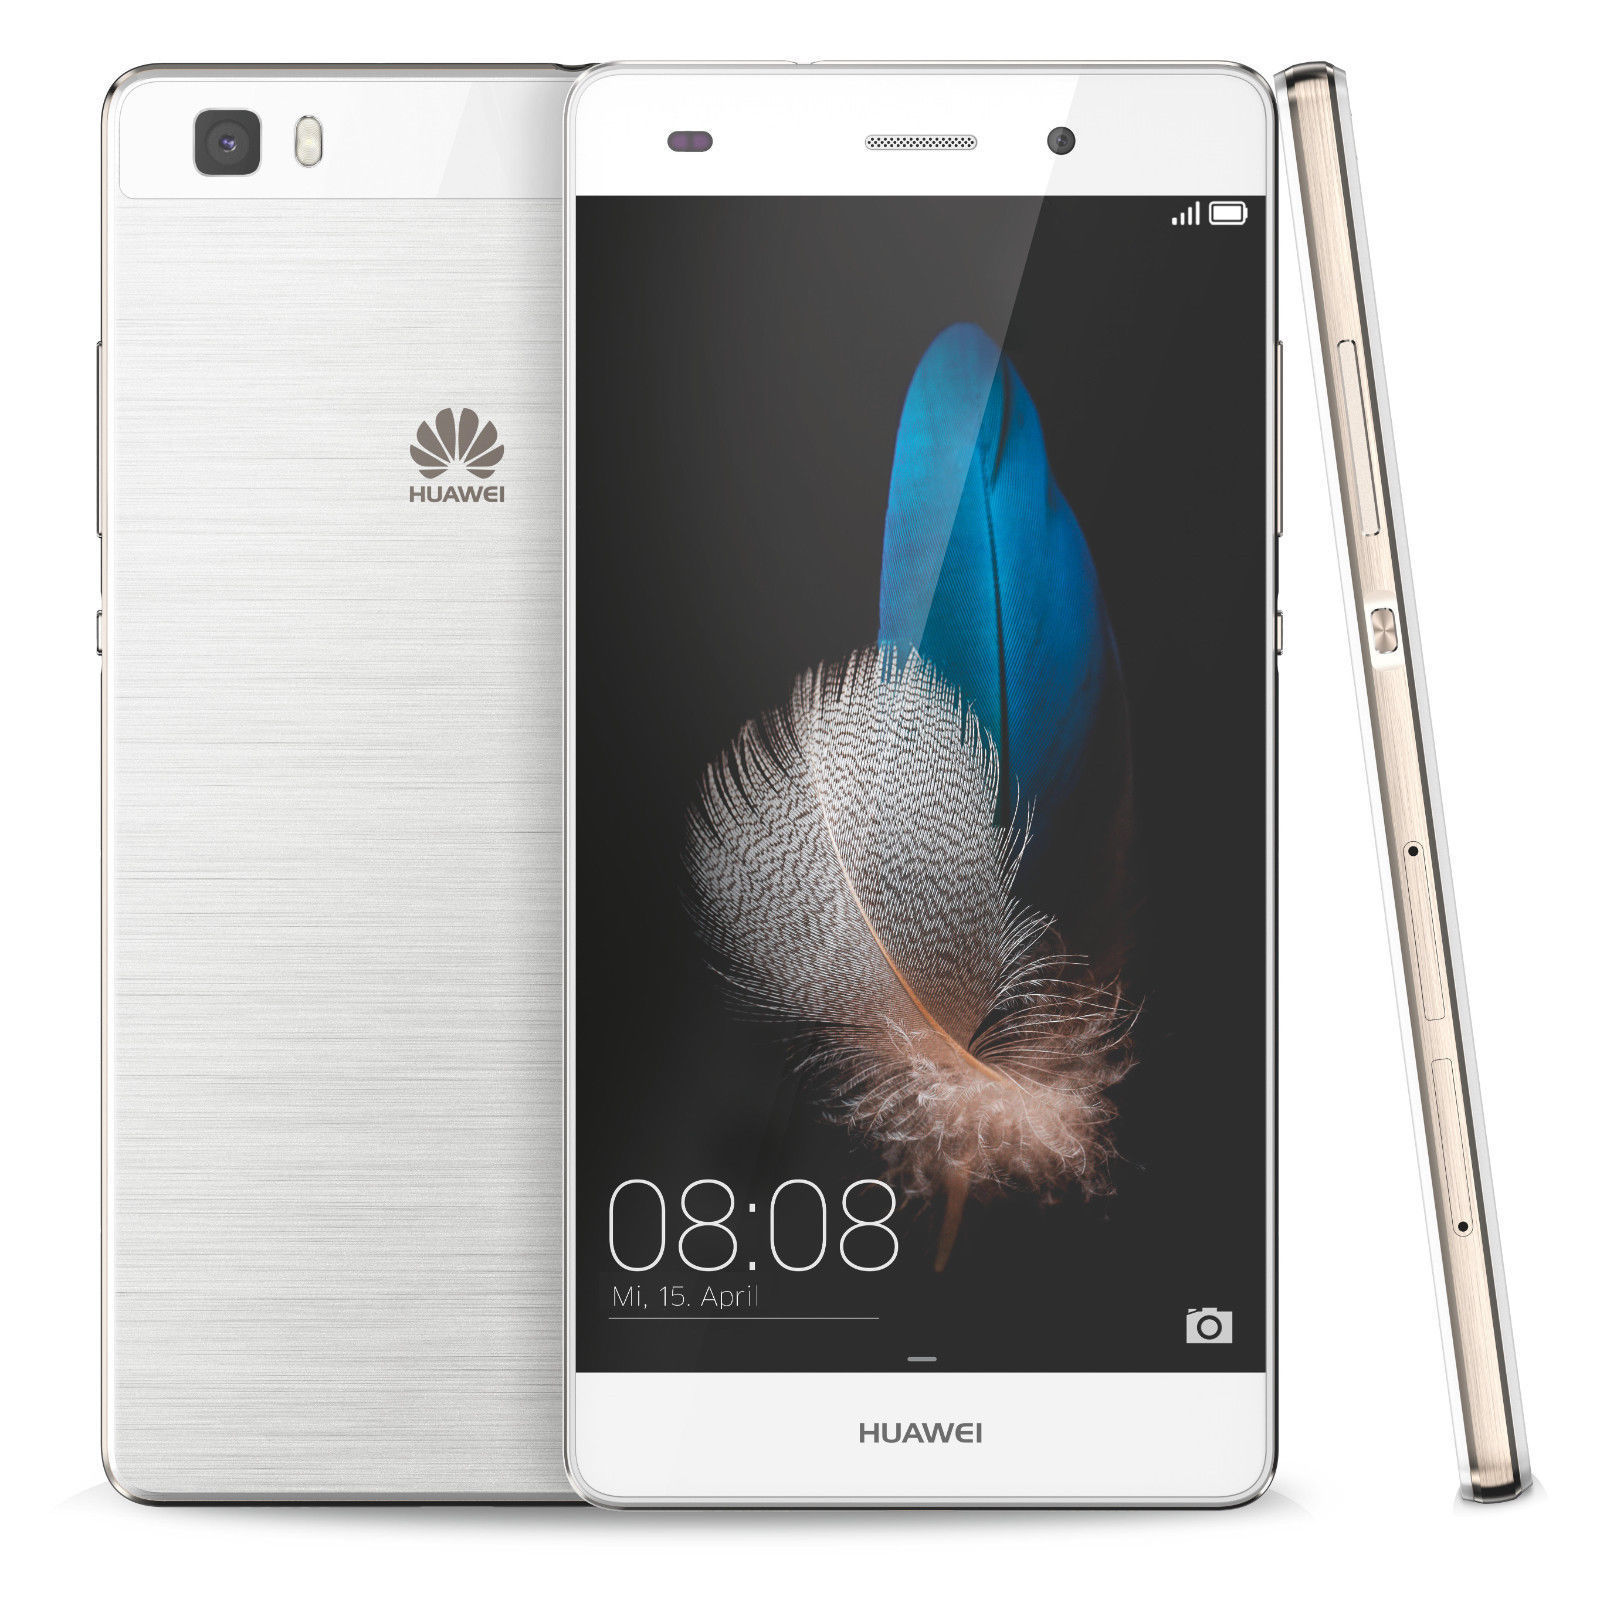 HUAWEI P8 Lite Smartphone Handy 16 GB 5 Zoll Weiß  / Gold  LTE 4G   *NEU&OVP*